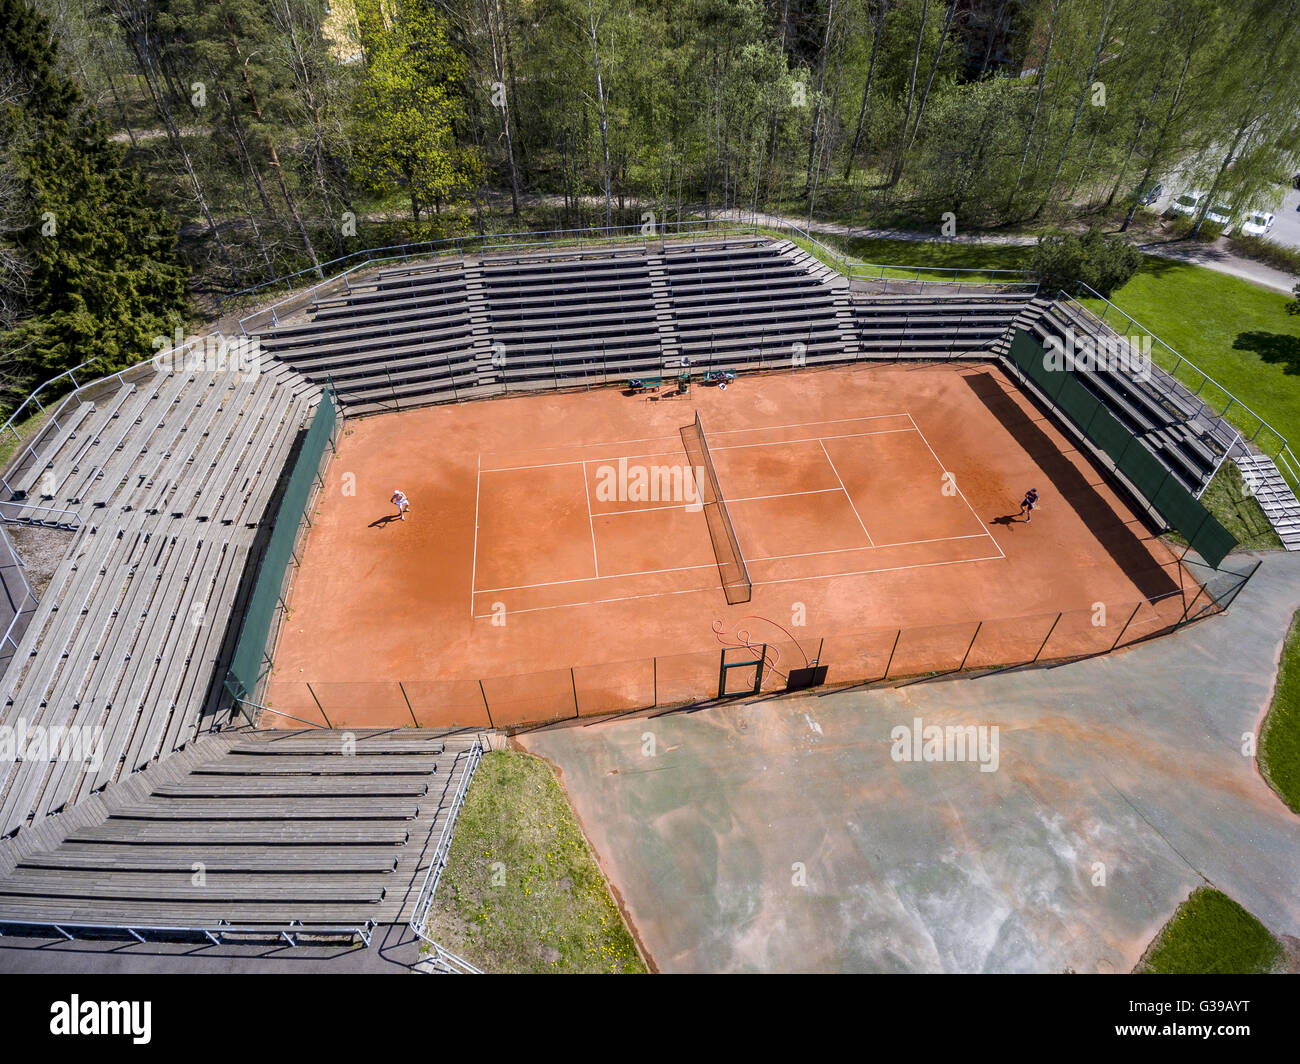 Tali tennis center Stock Photo - Alamy